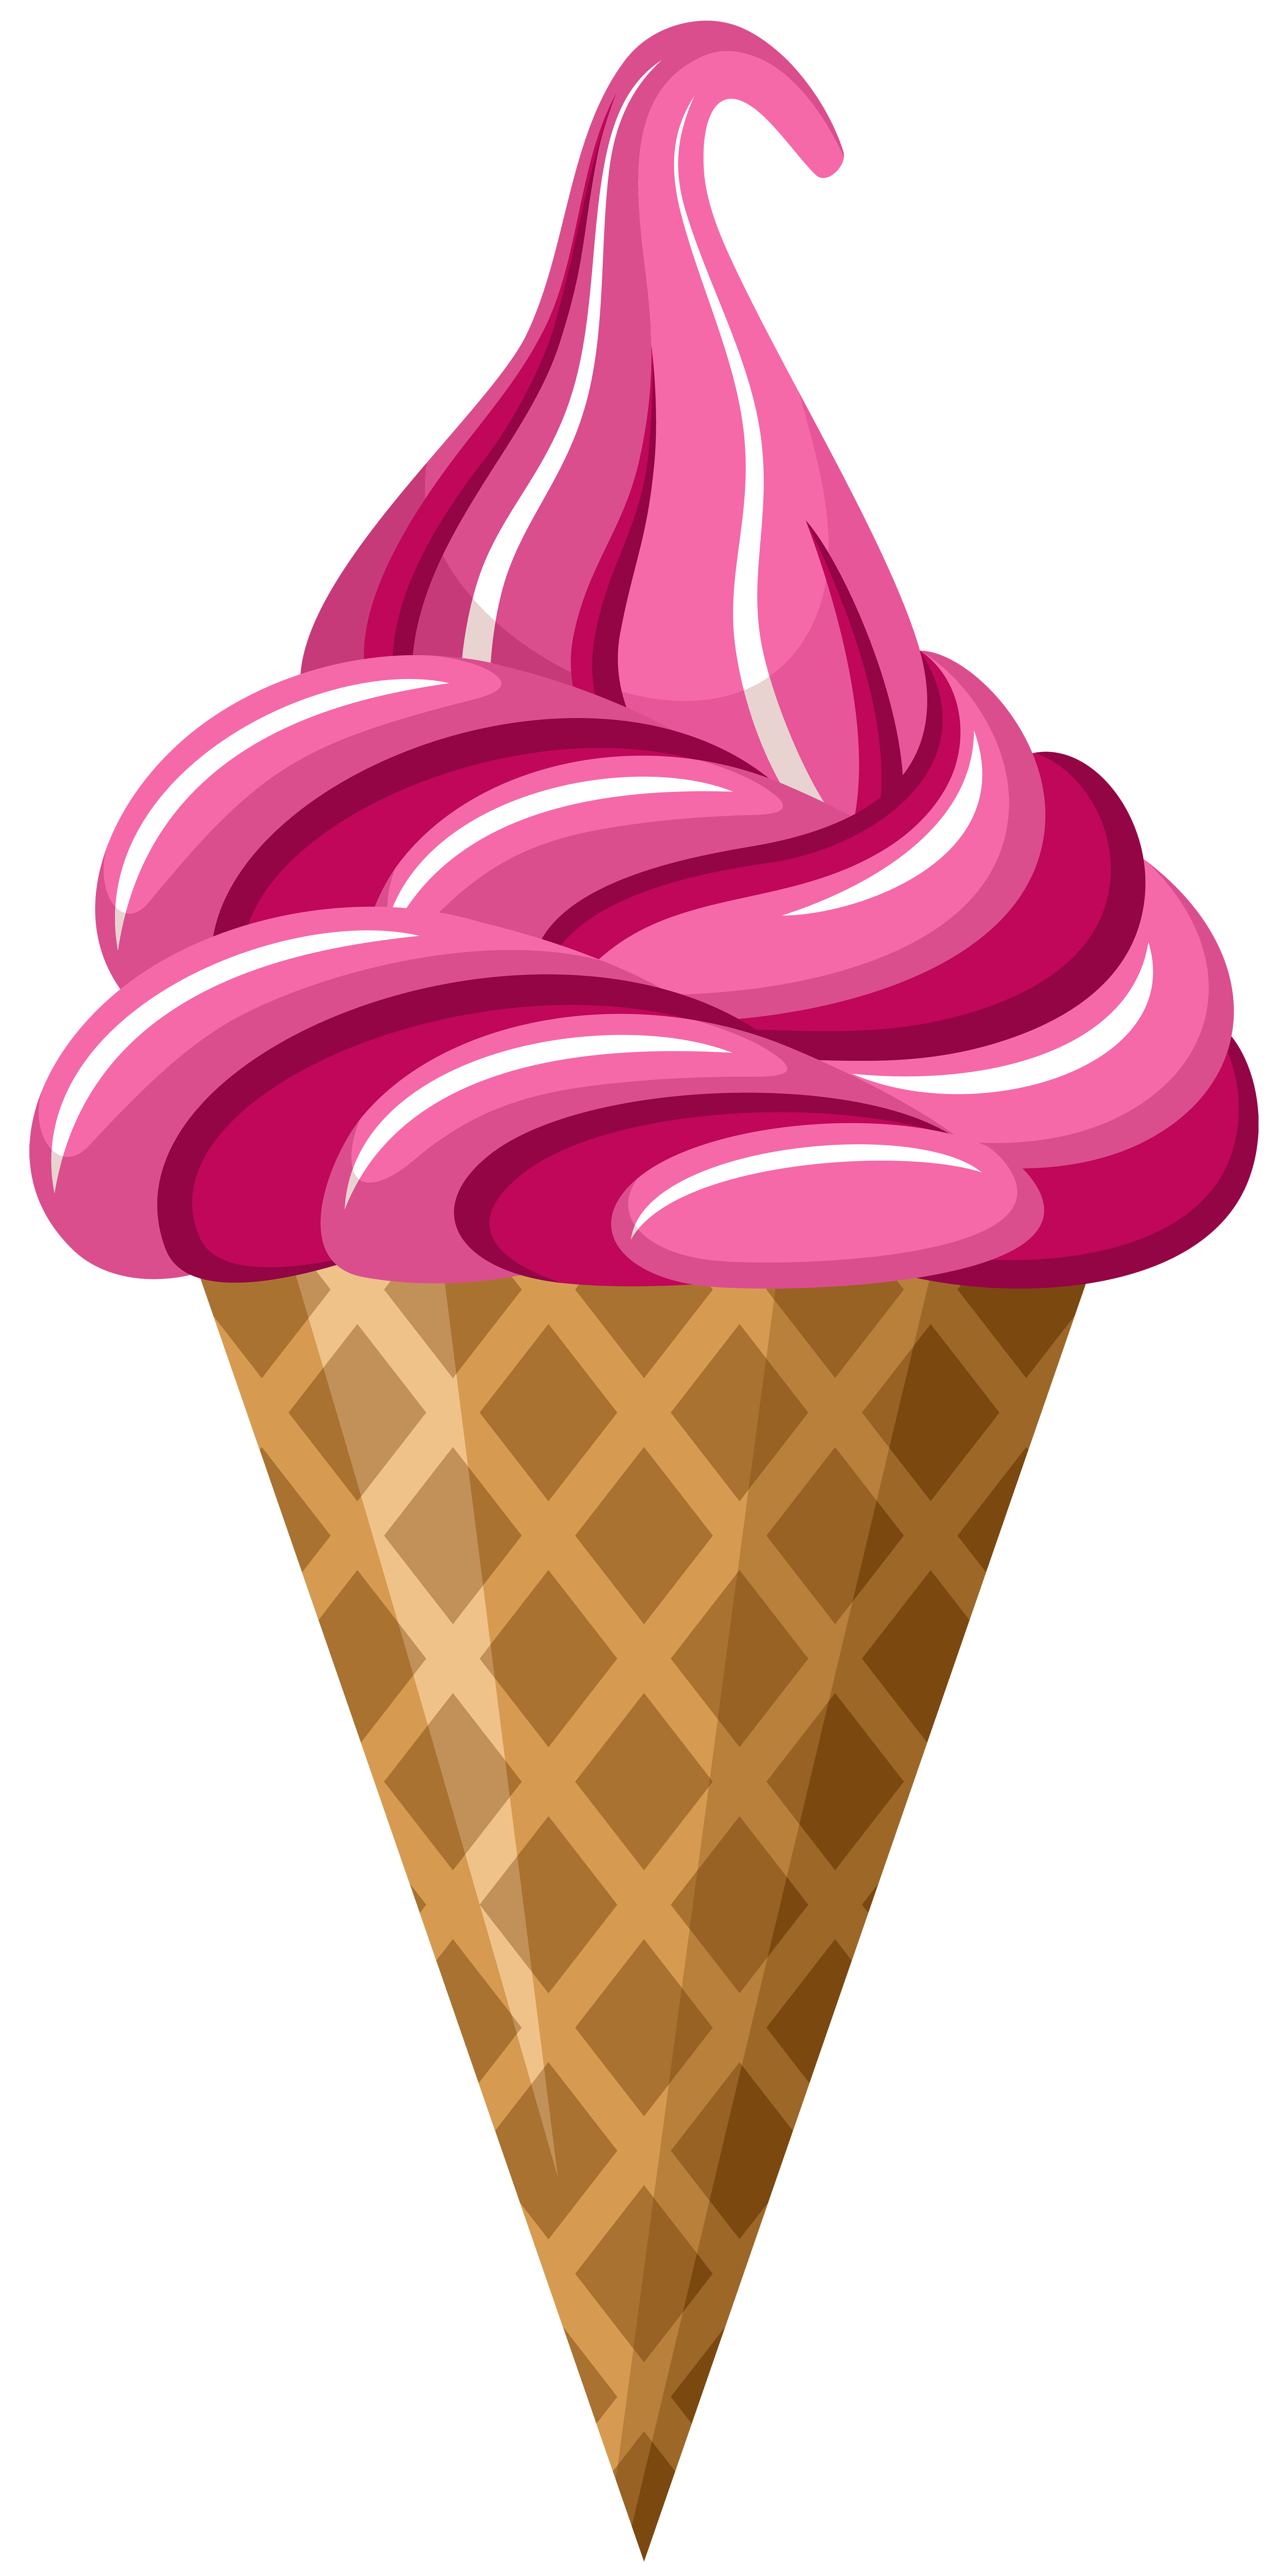 Free Ice Cream Cone Clipart, Download Free Ice Cream Cone Clipart png